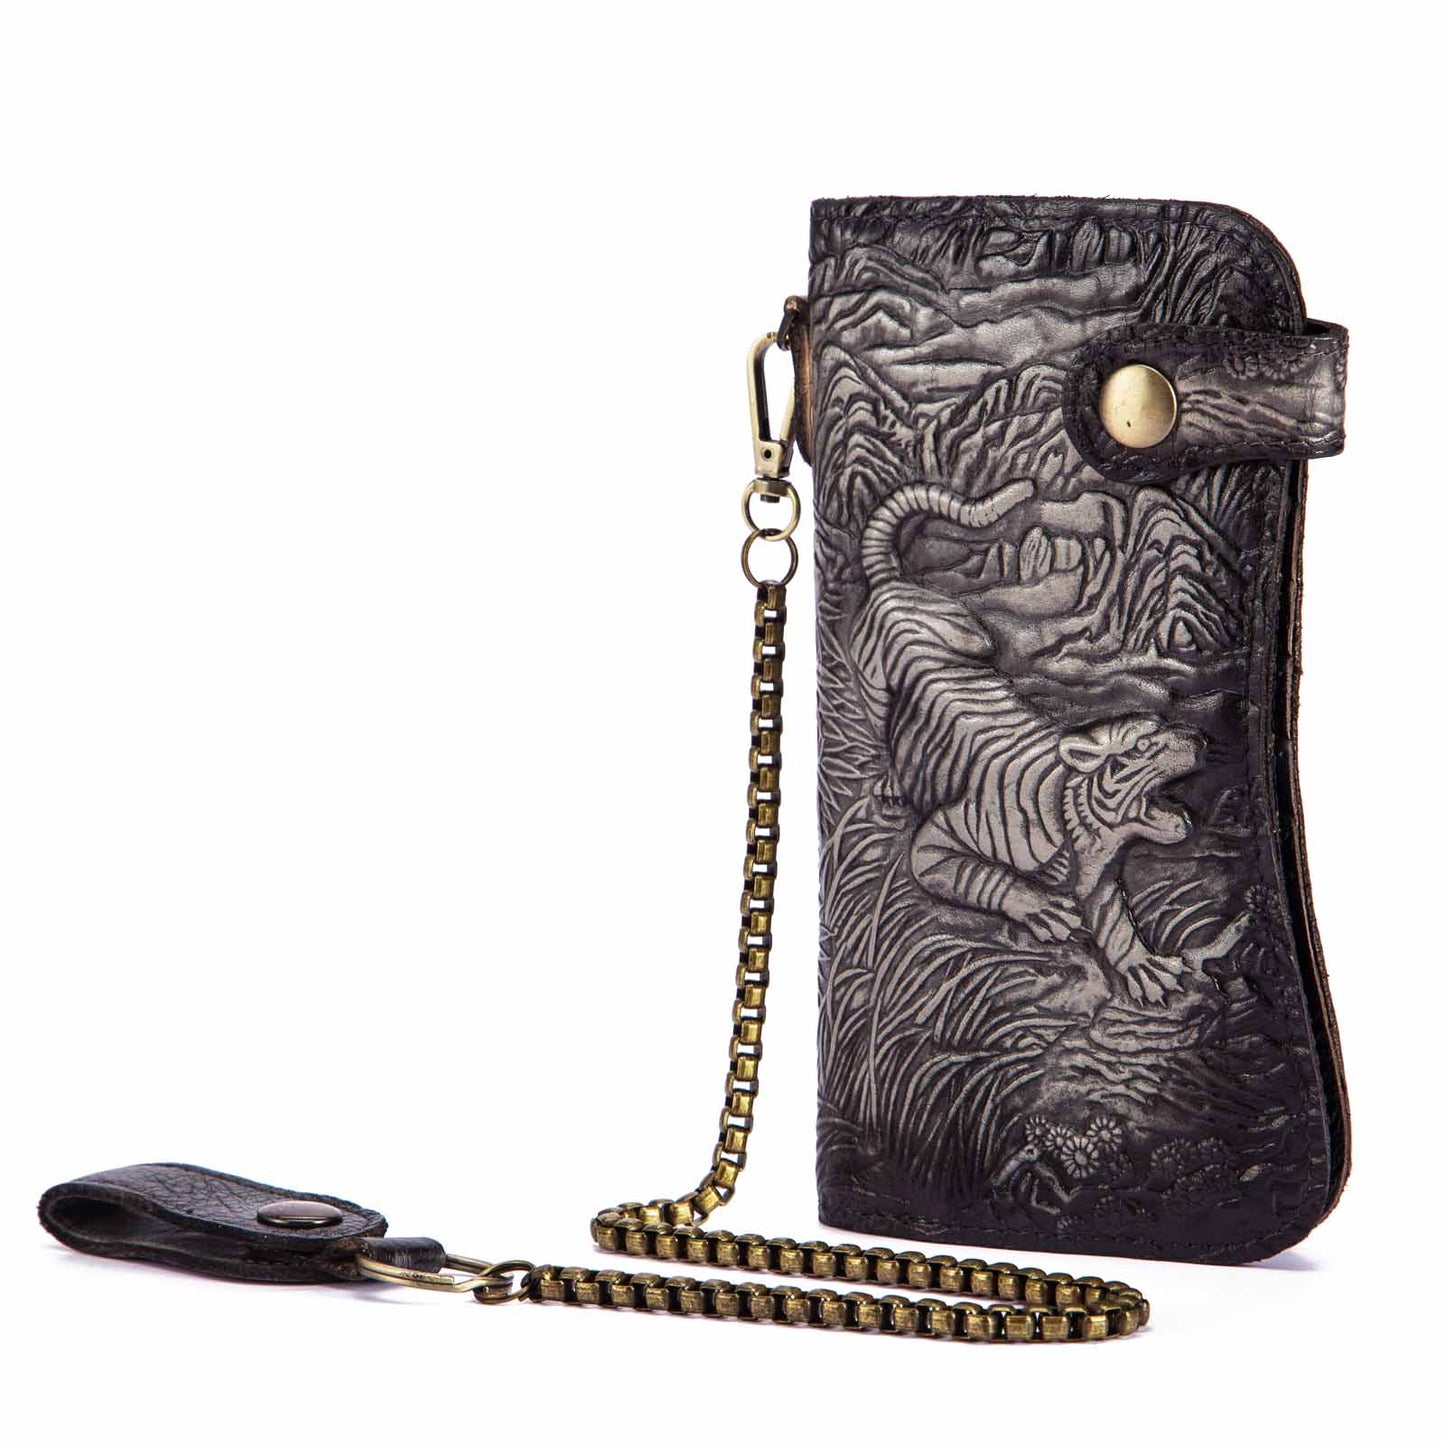 Cattle Male Genuine leather Dargon Tiger Emboss Fashion Checkbook Iron Chain Organizer Wallet Purse Design Clutch Handbag 1088